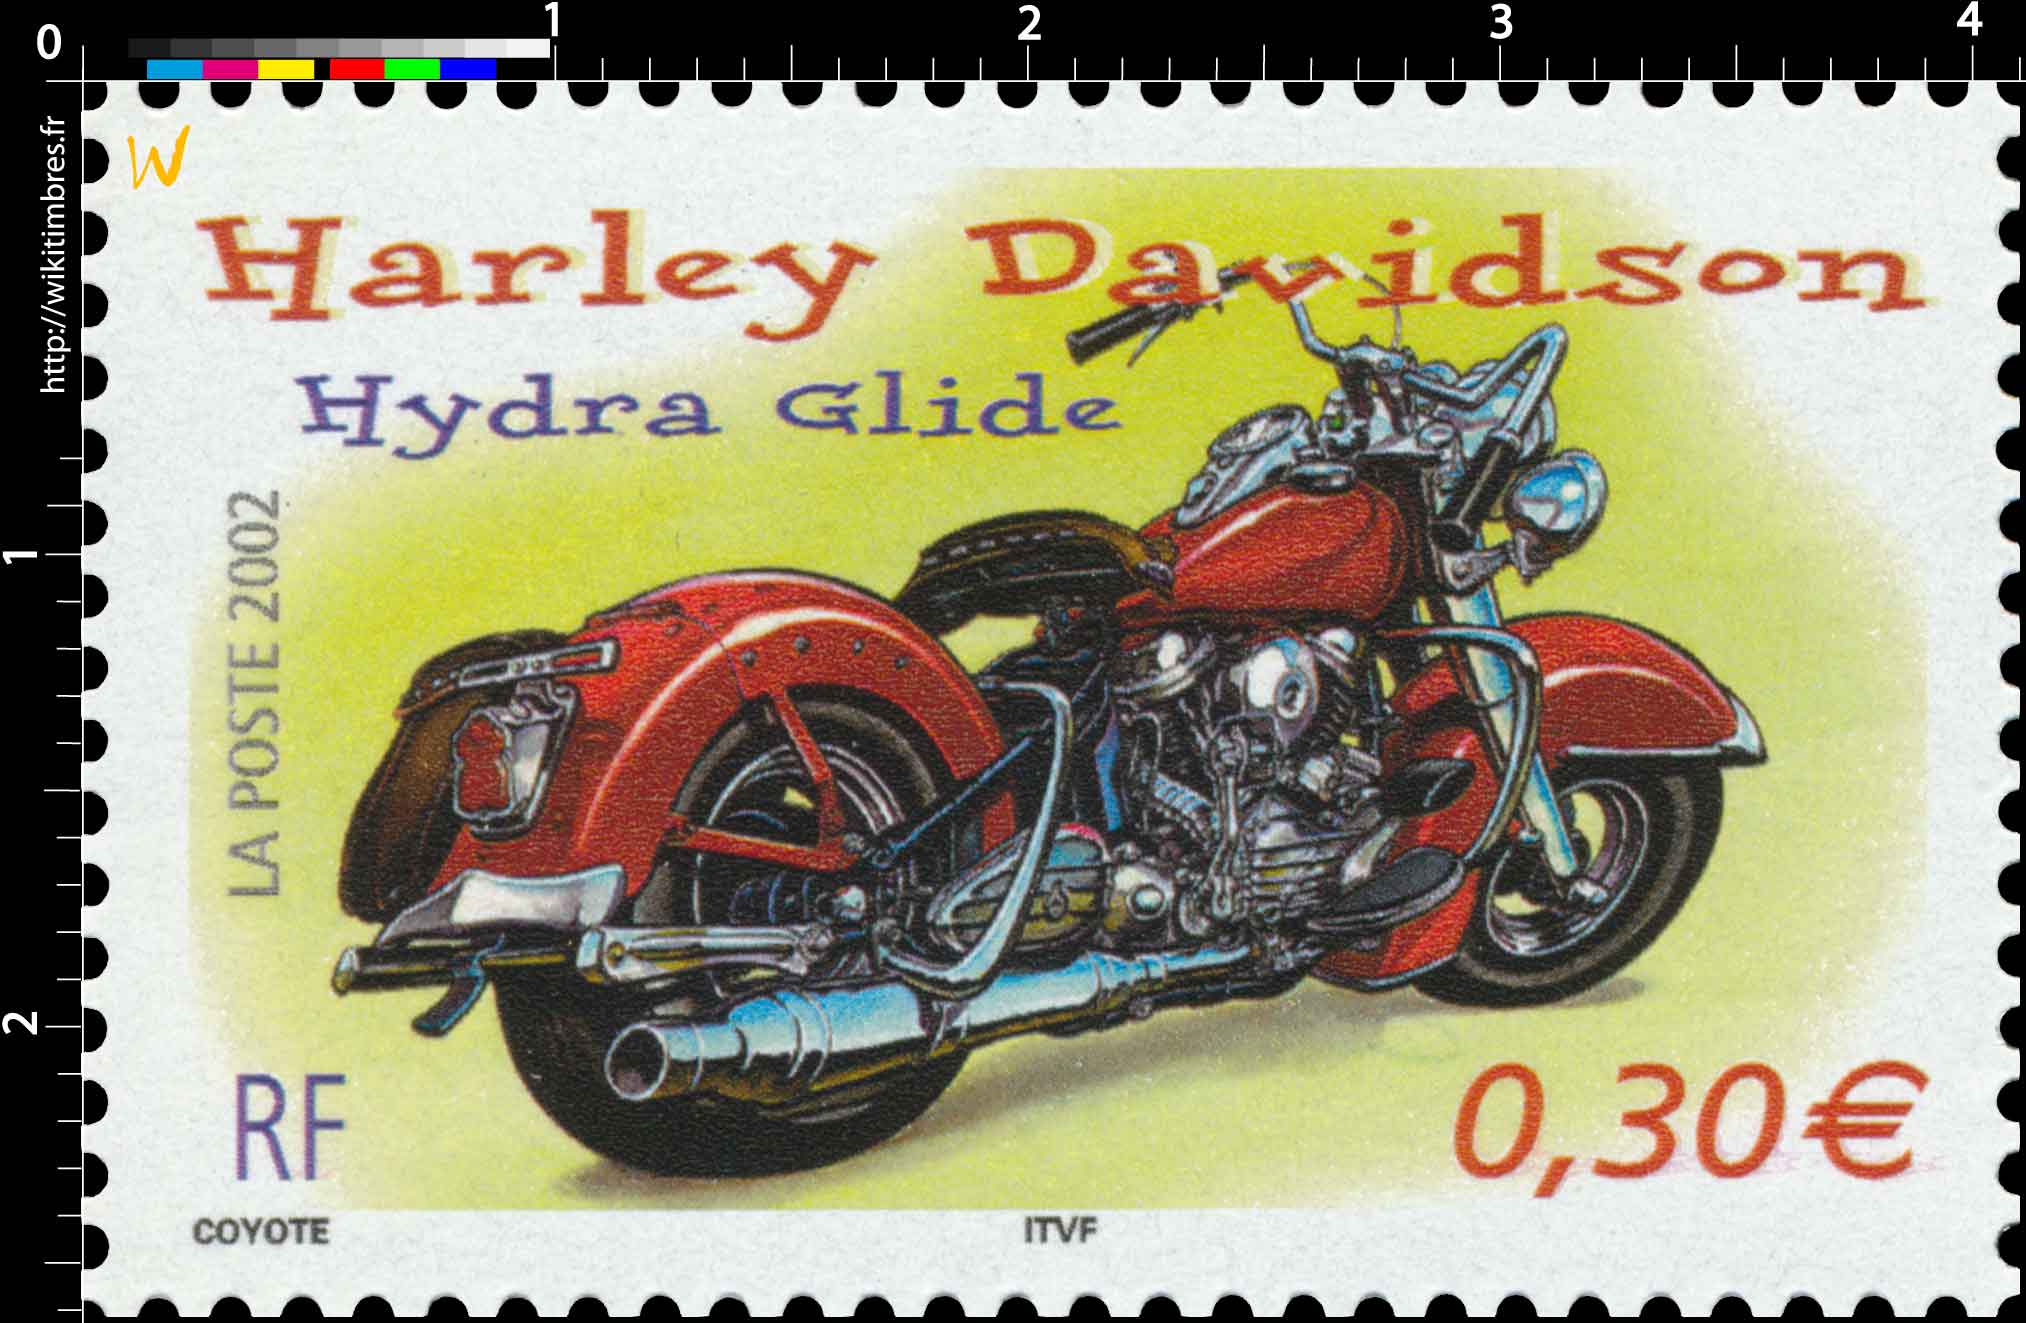 2002 Harley Davidson Hydra Glide